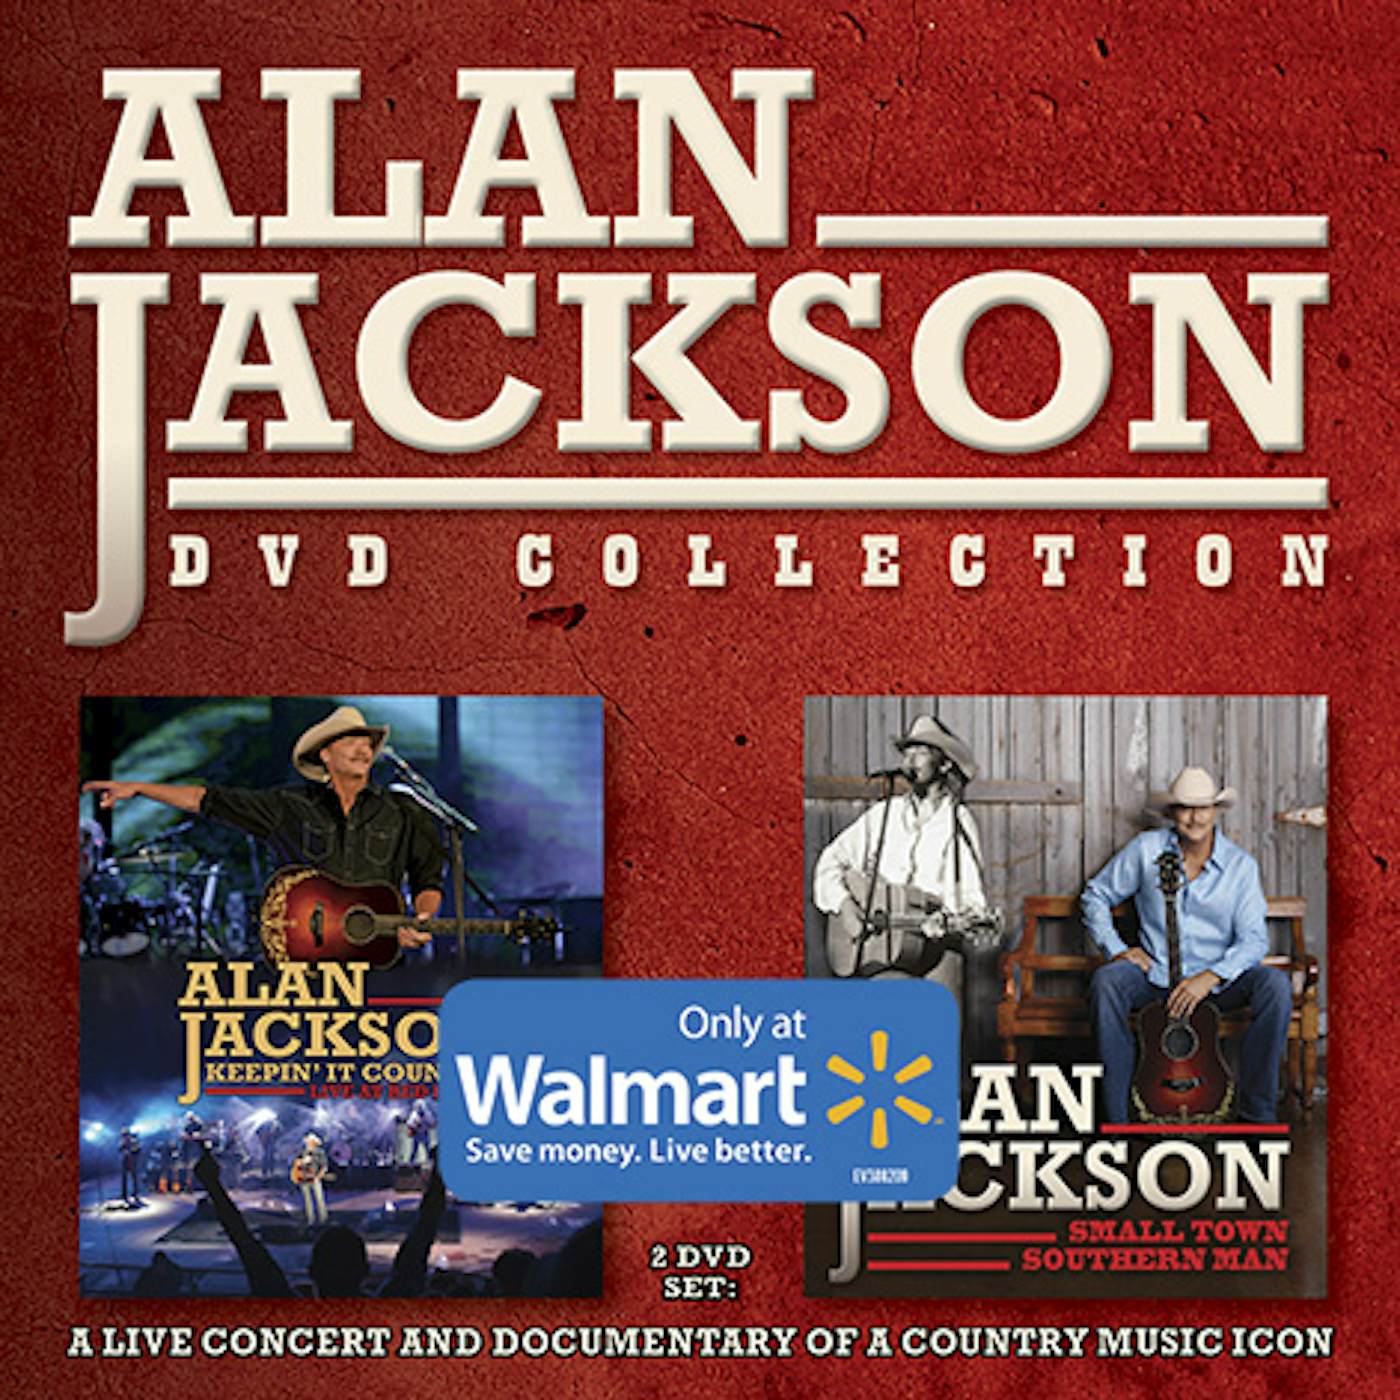 ALAN JACKSON DVD COLLECTION DVD